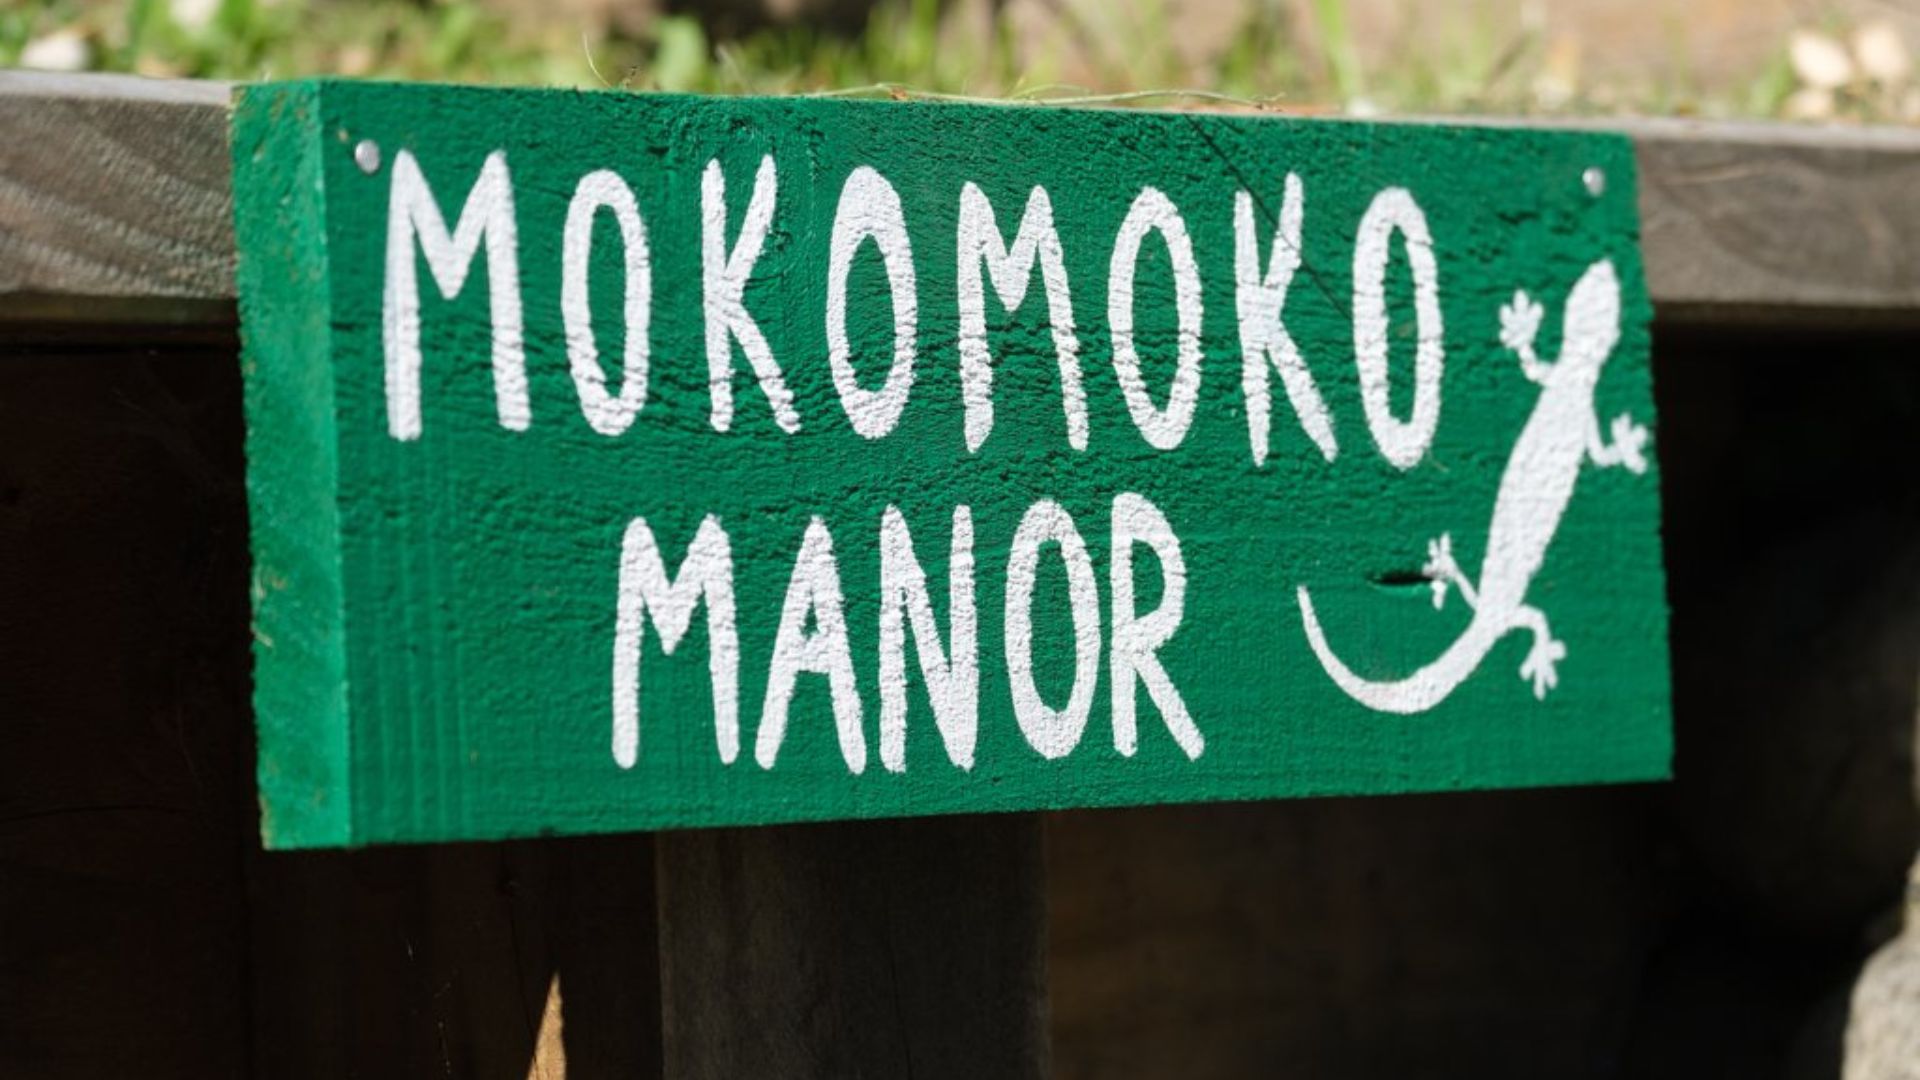 "Mokomoko manor" Sign